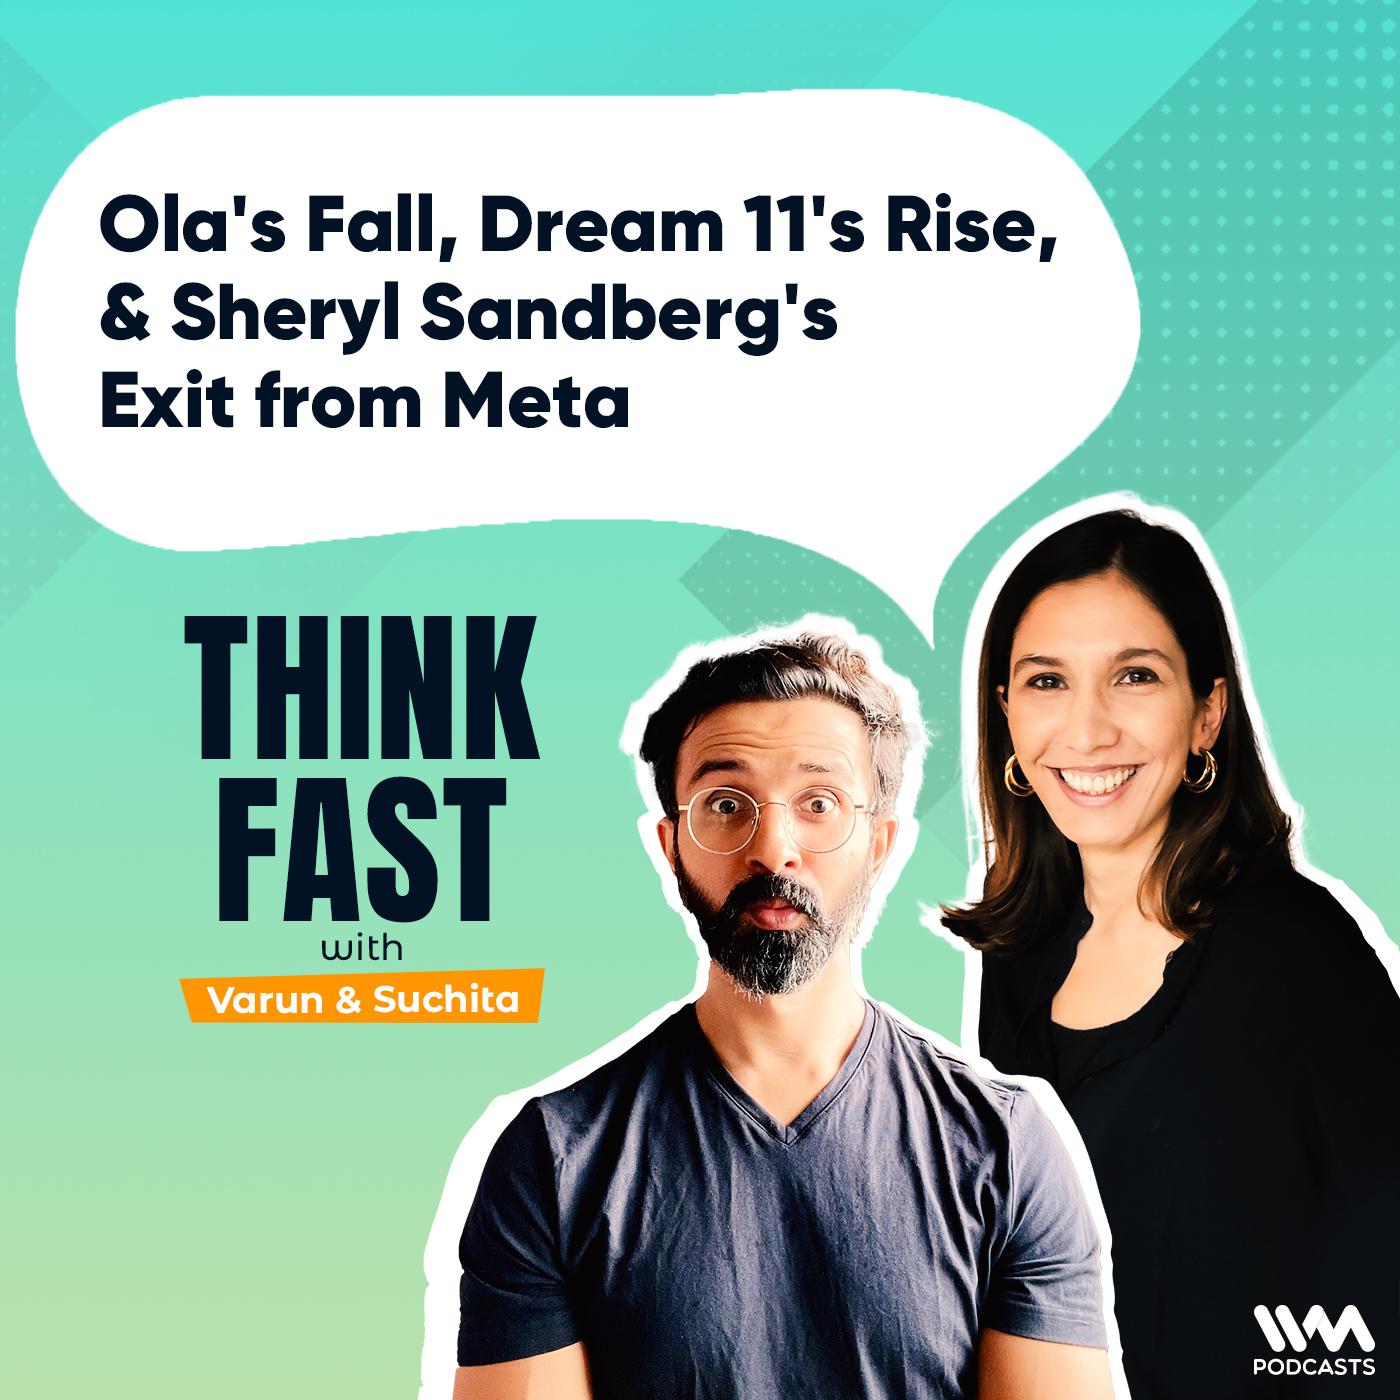 Ola's Fall, Dream 11's Rise, & Sheryl Sandberg's Exit from Meta